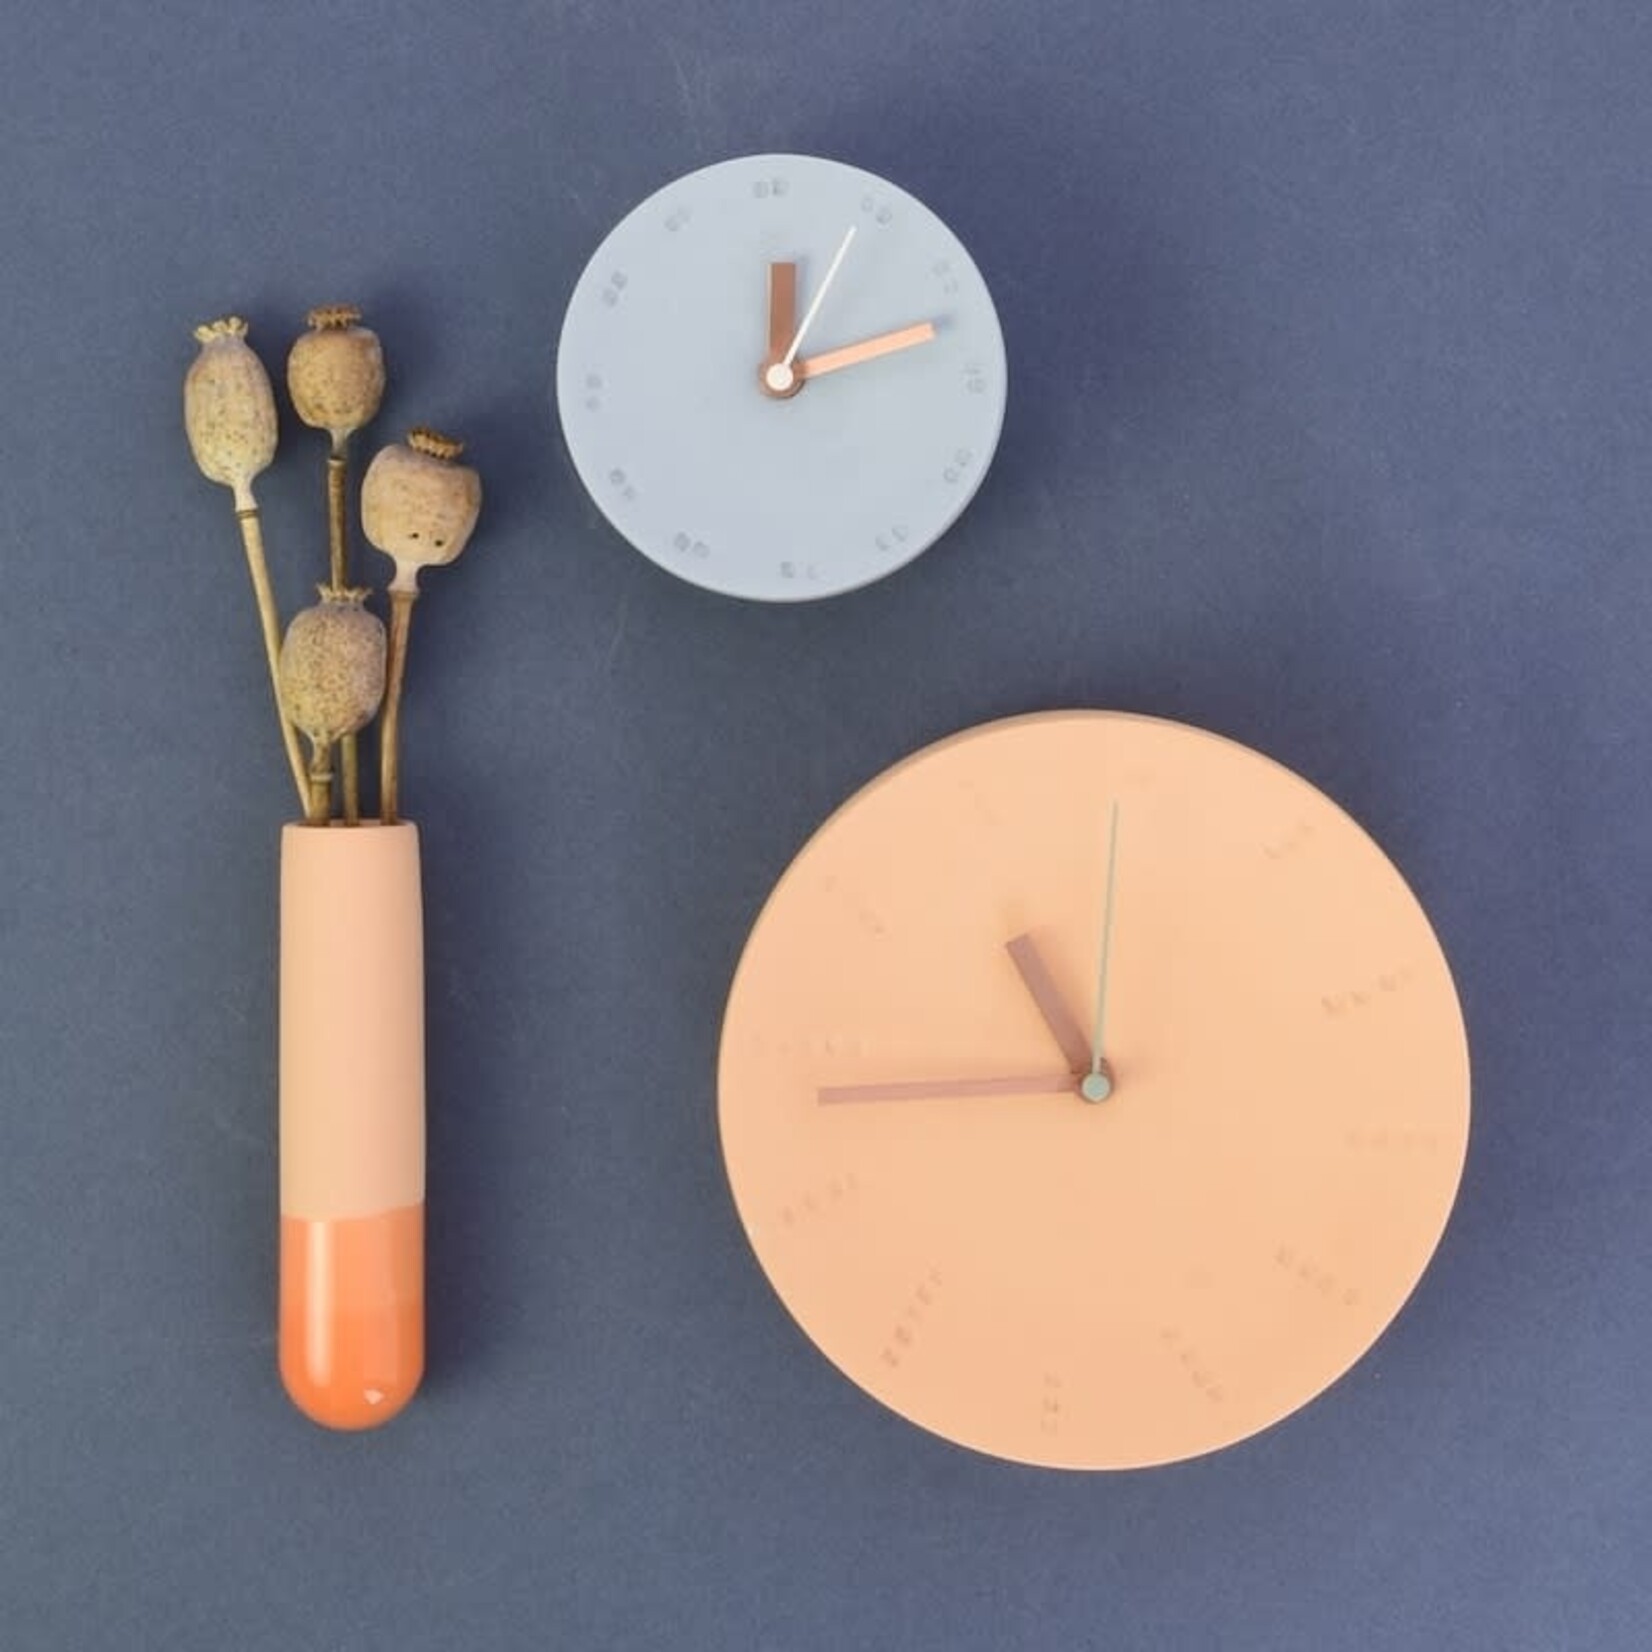 Harm&Elke clock large - orange/mint